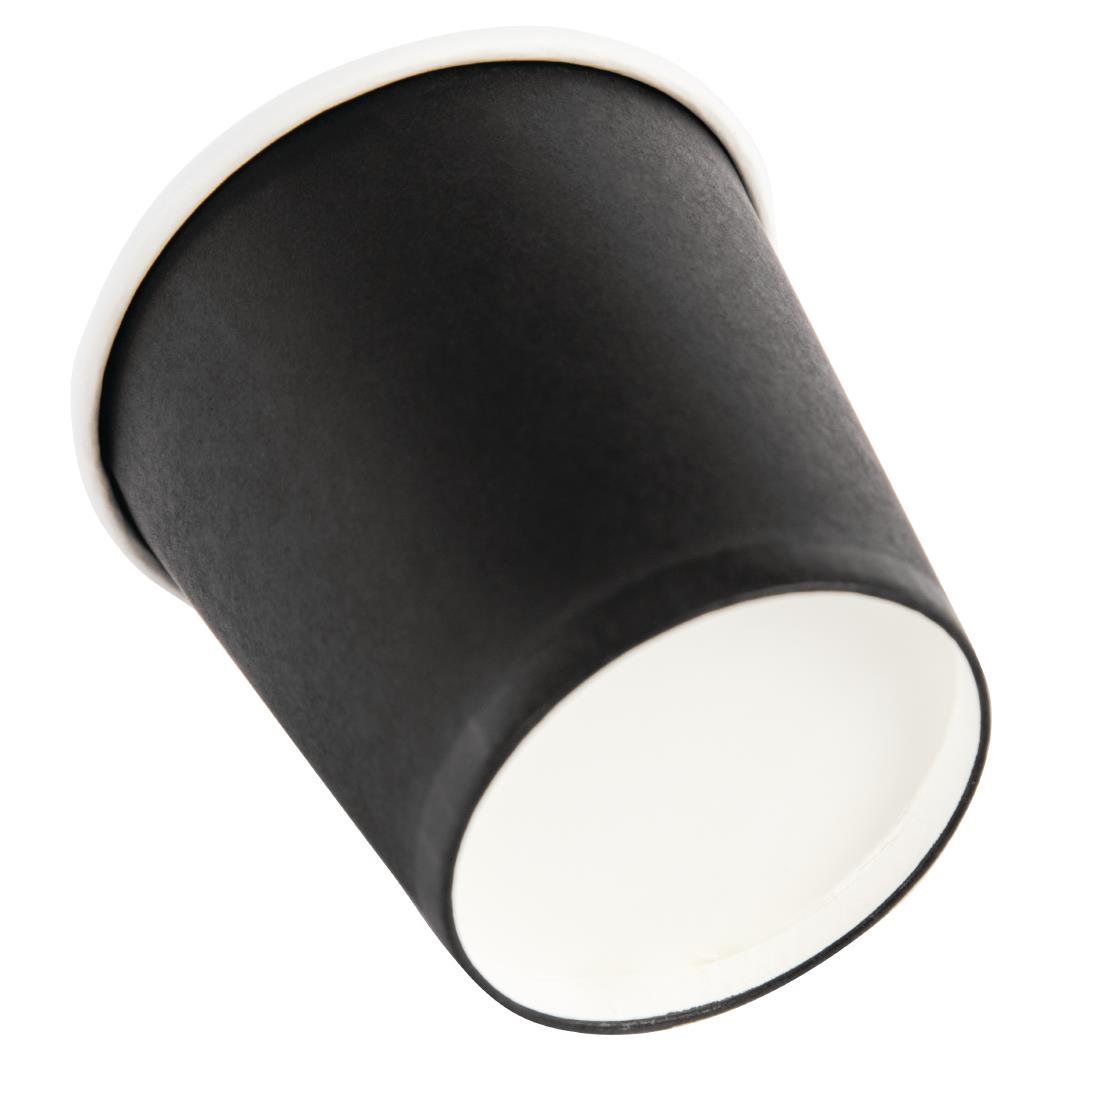 Fiesta Recyclable Espresso Cups Single Wall Black 112ml / 4oz (Pack of 1000) - GF018  - 3